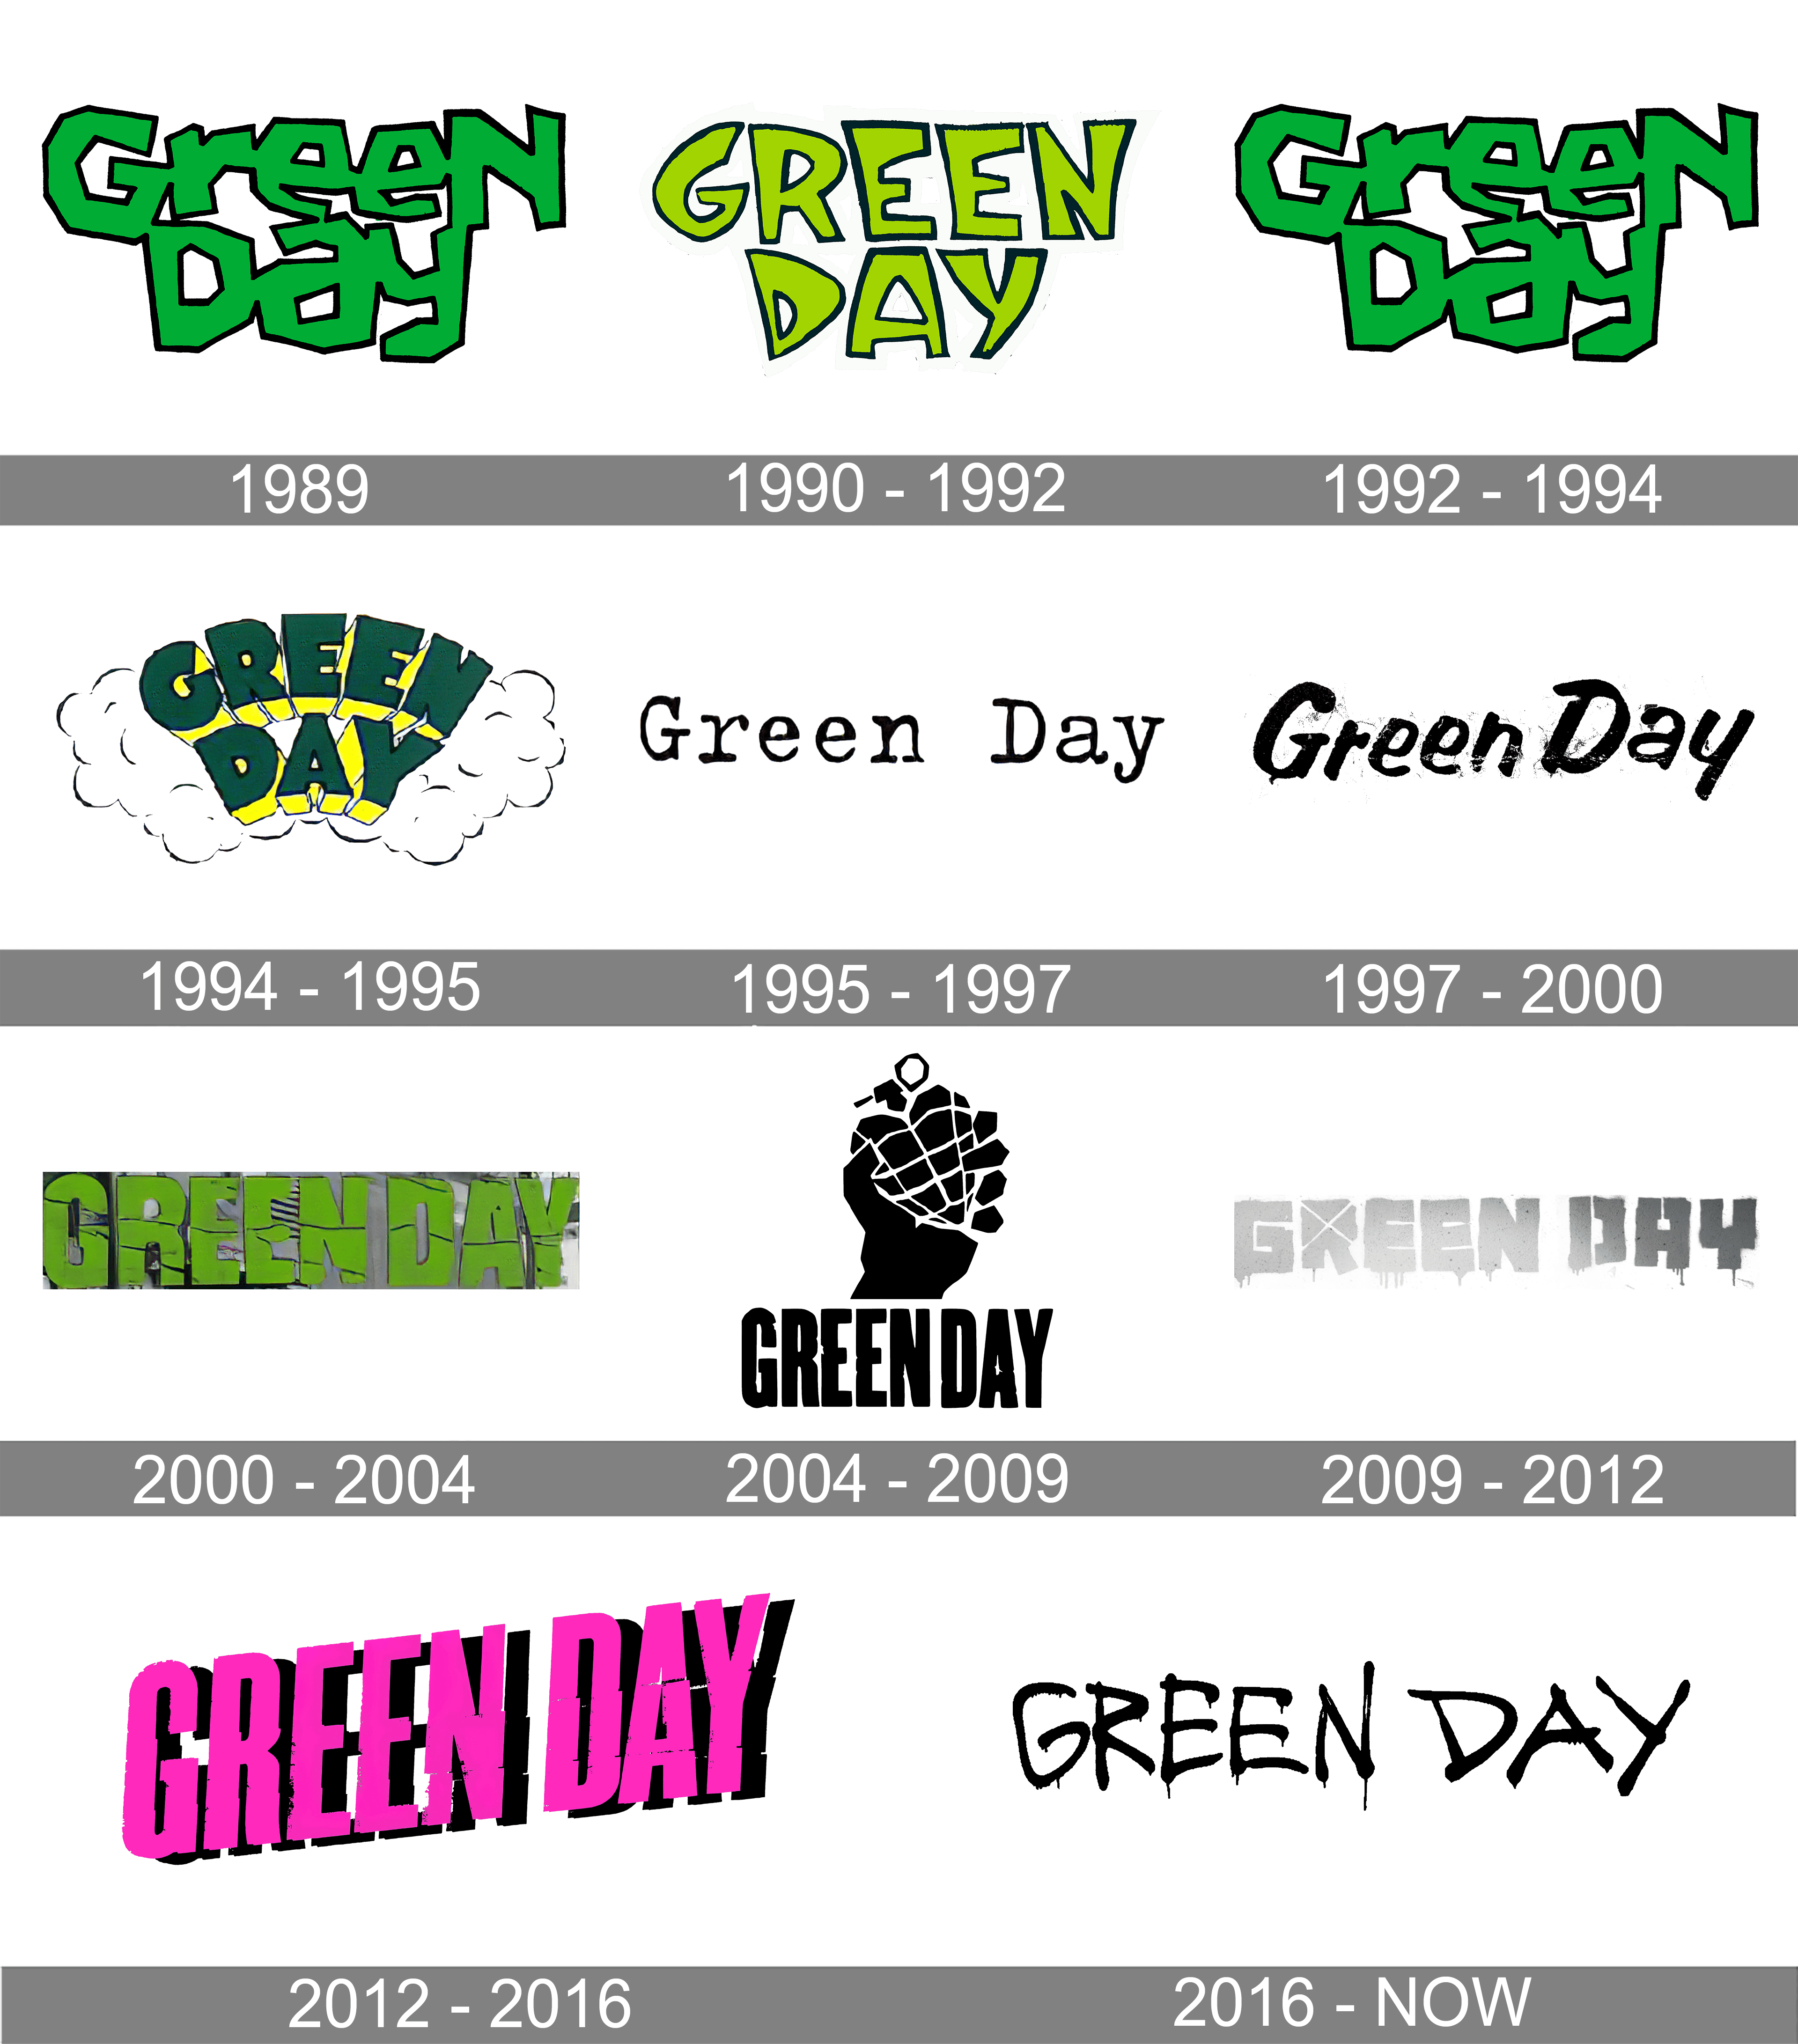 green day logo transparent